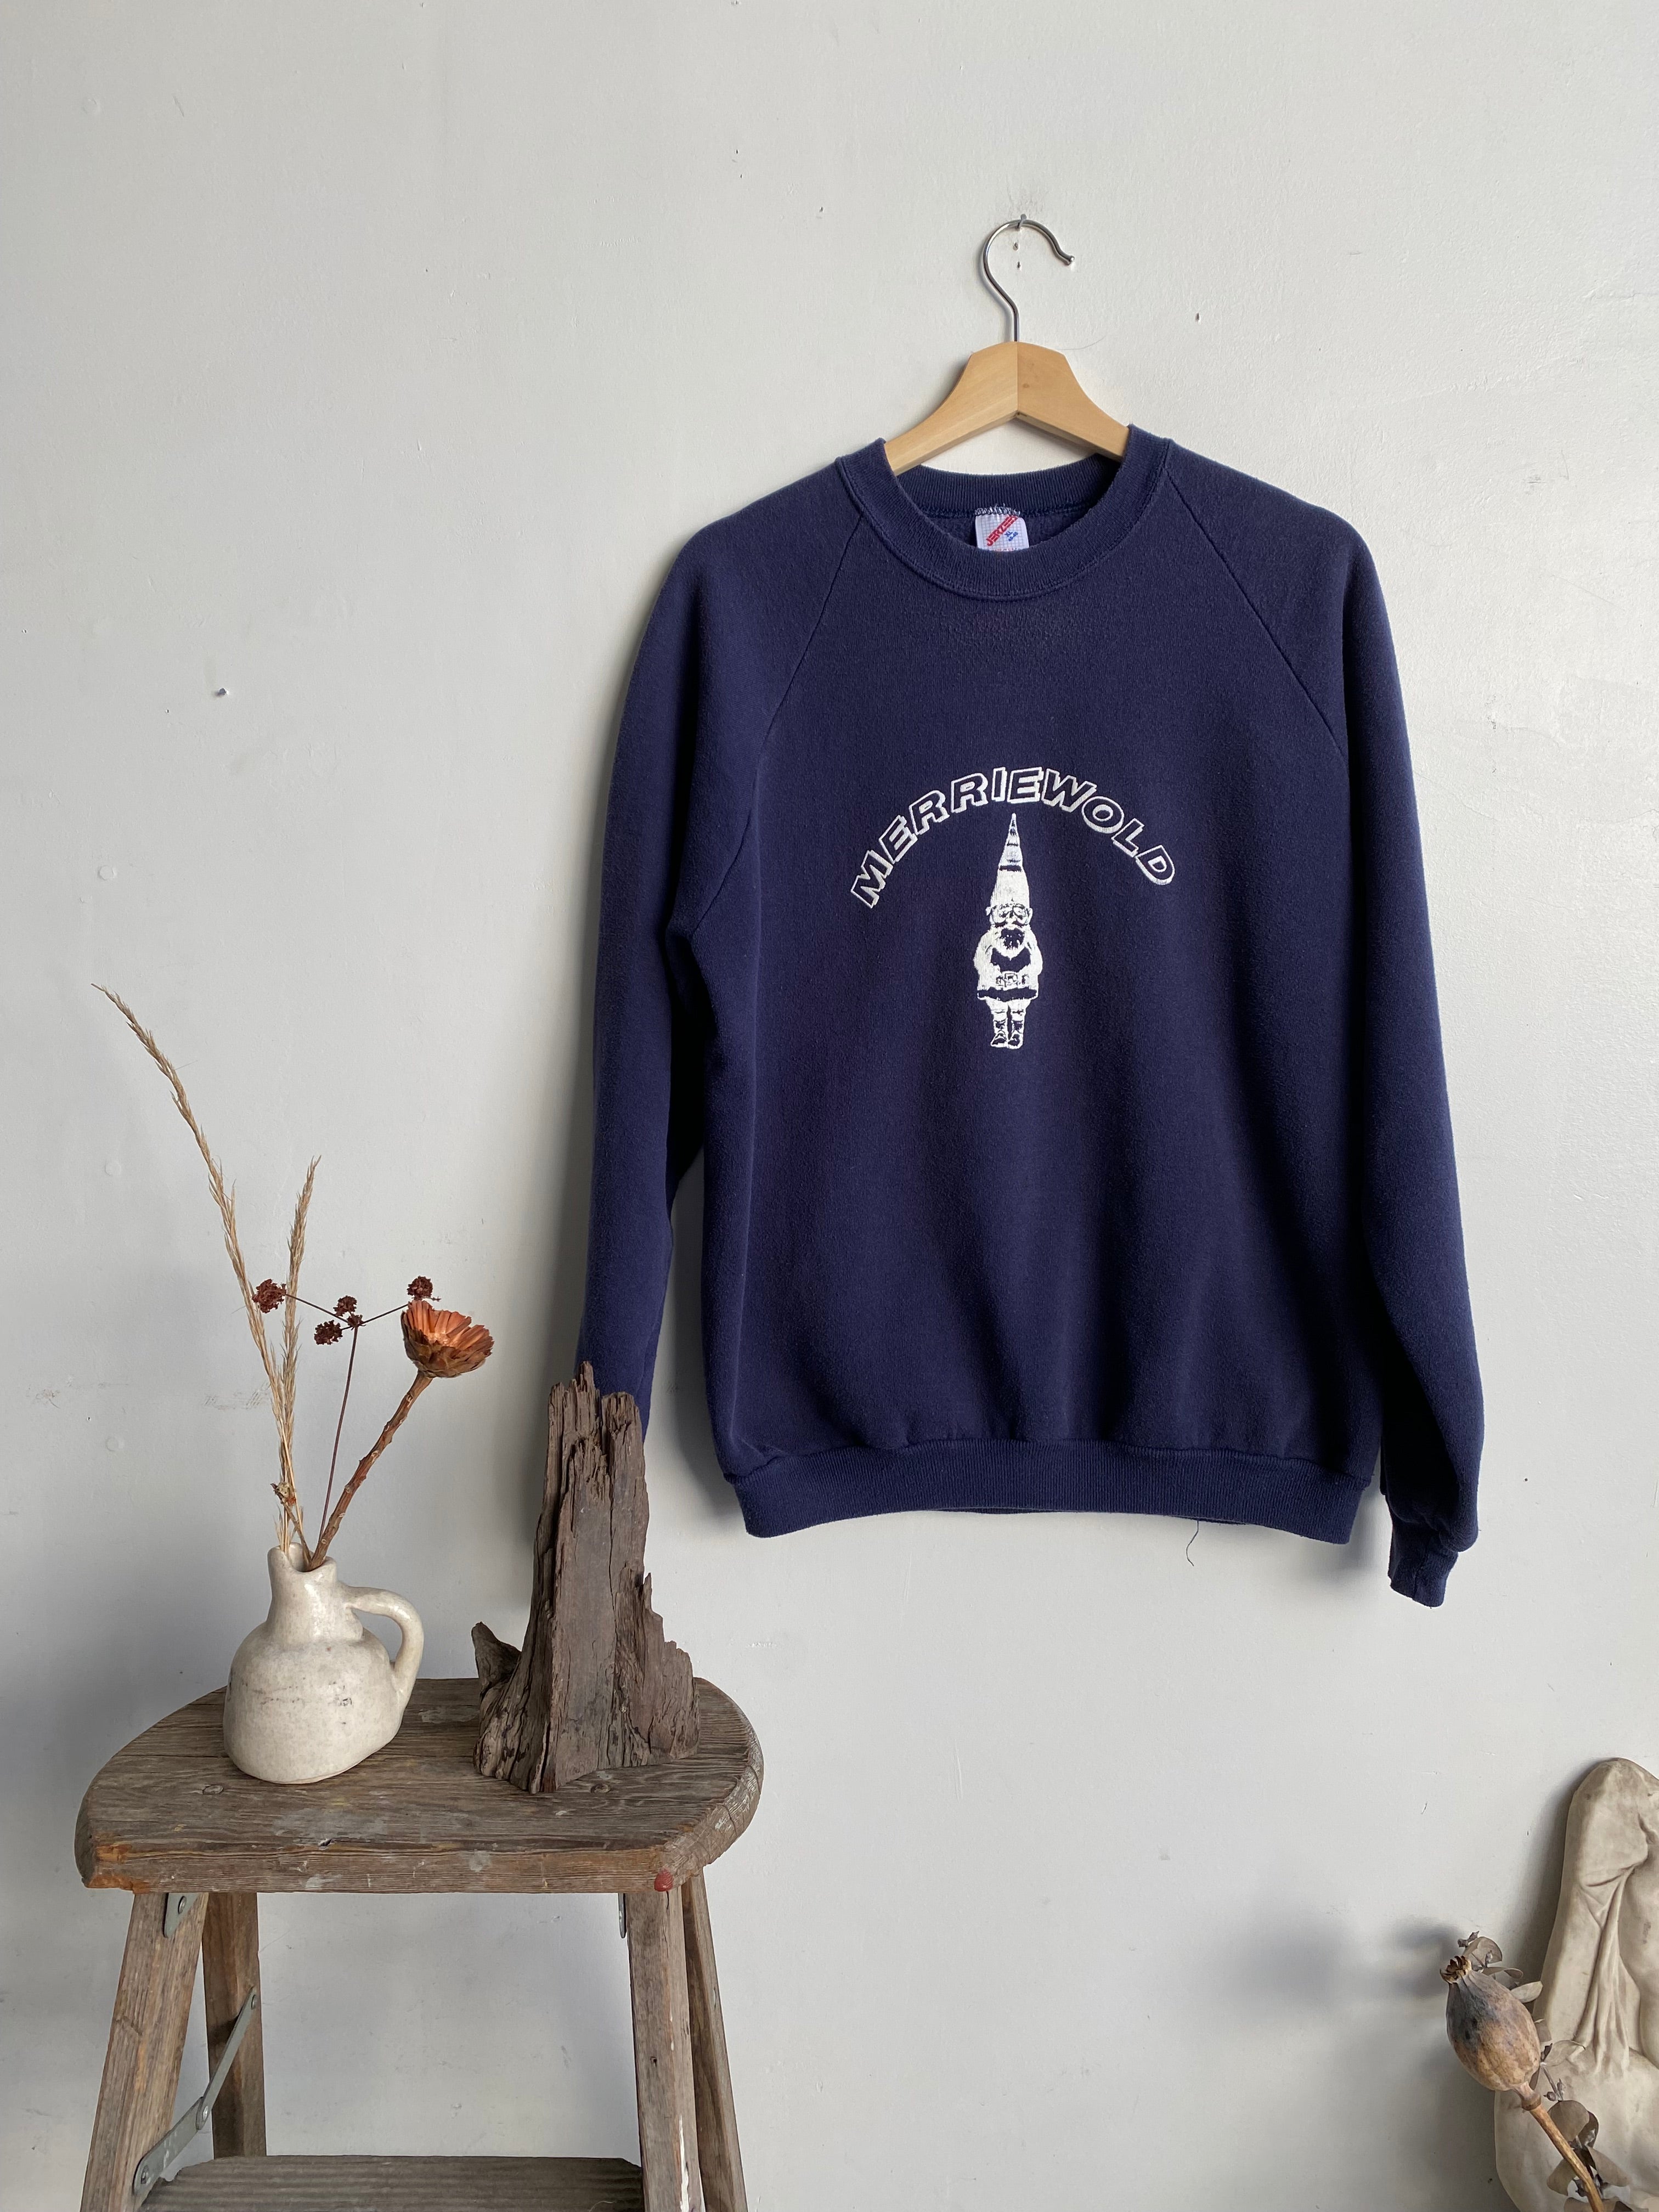 1990s Merriewold Gnome Sweatshirt (M/L)